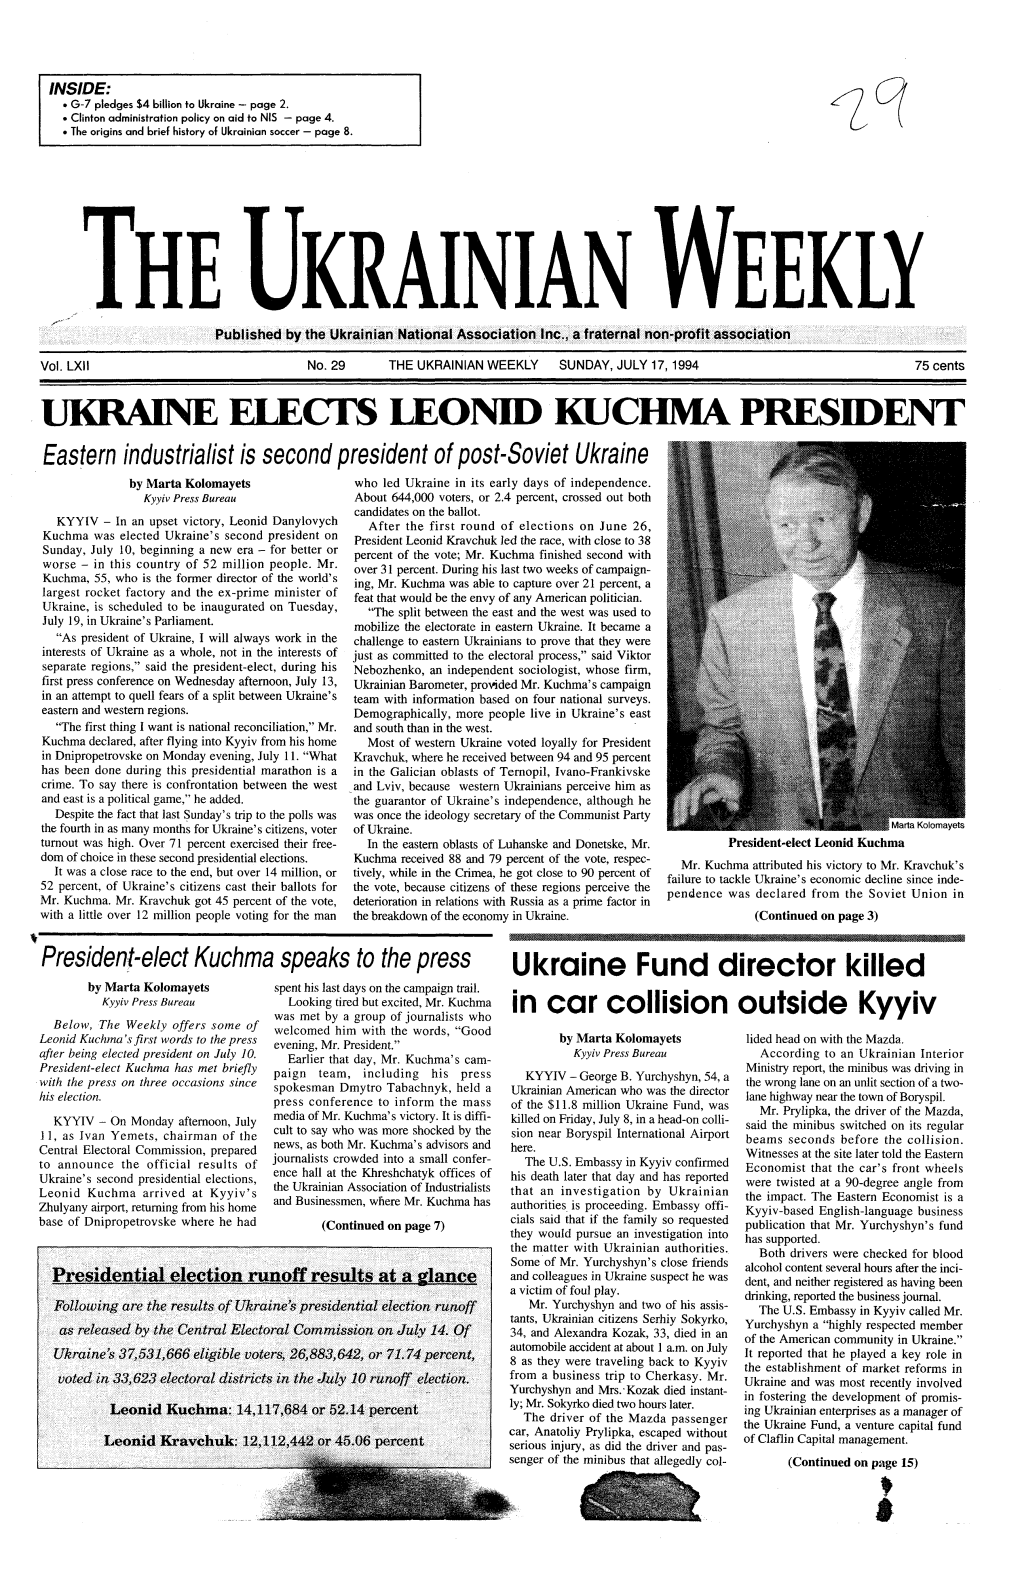 The Ukrainian Weekly 1994, No.29